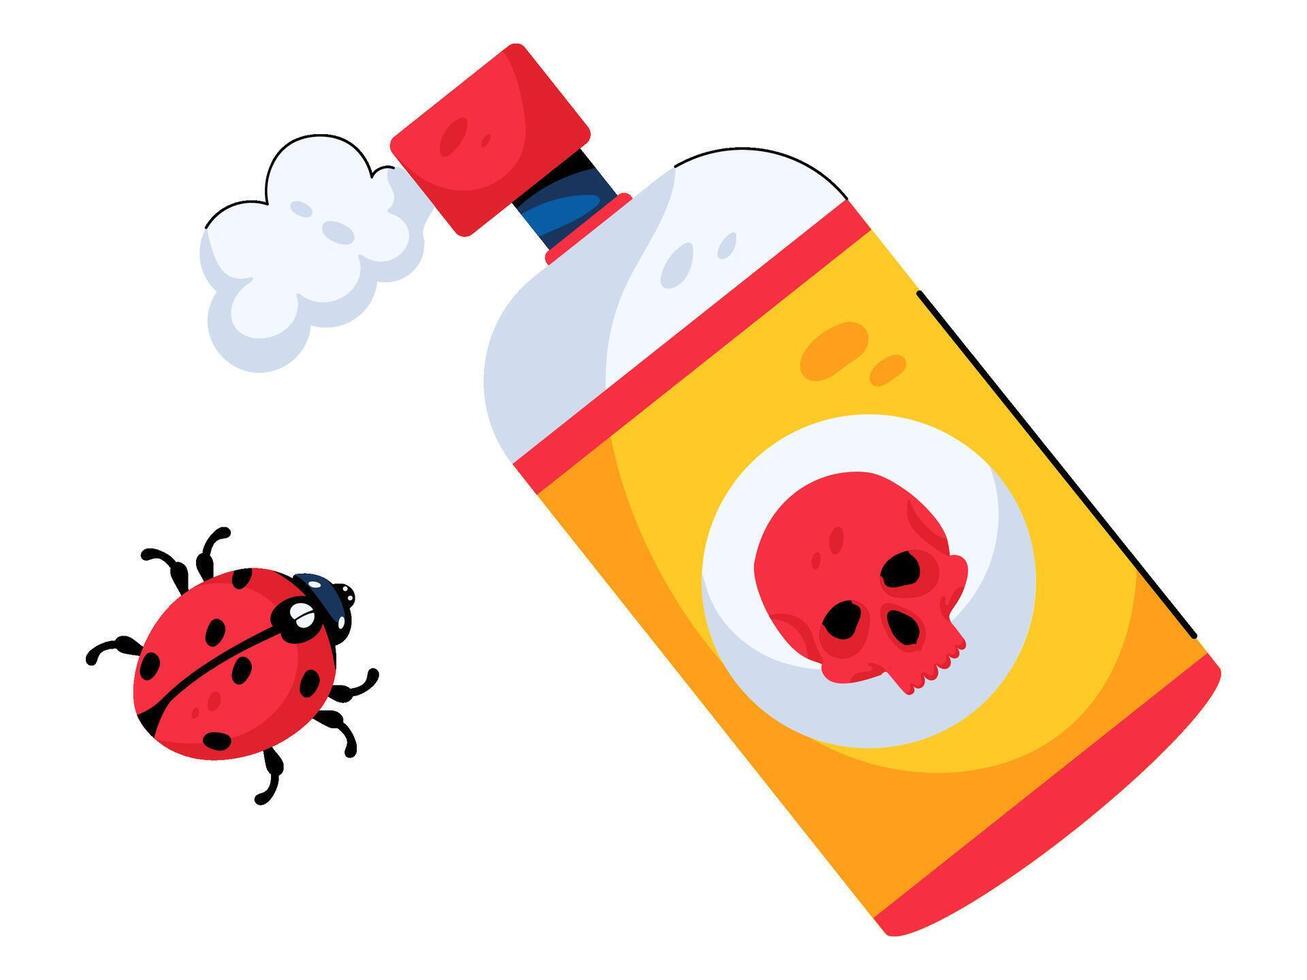 pest spray design with modern illustration concept style for badge farm agriculture sticker illustration vector